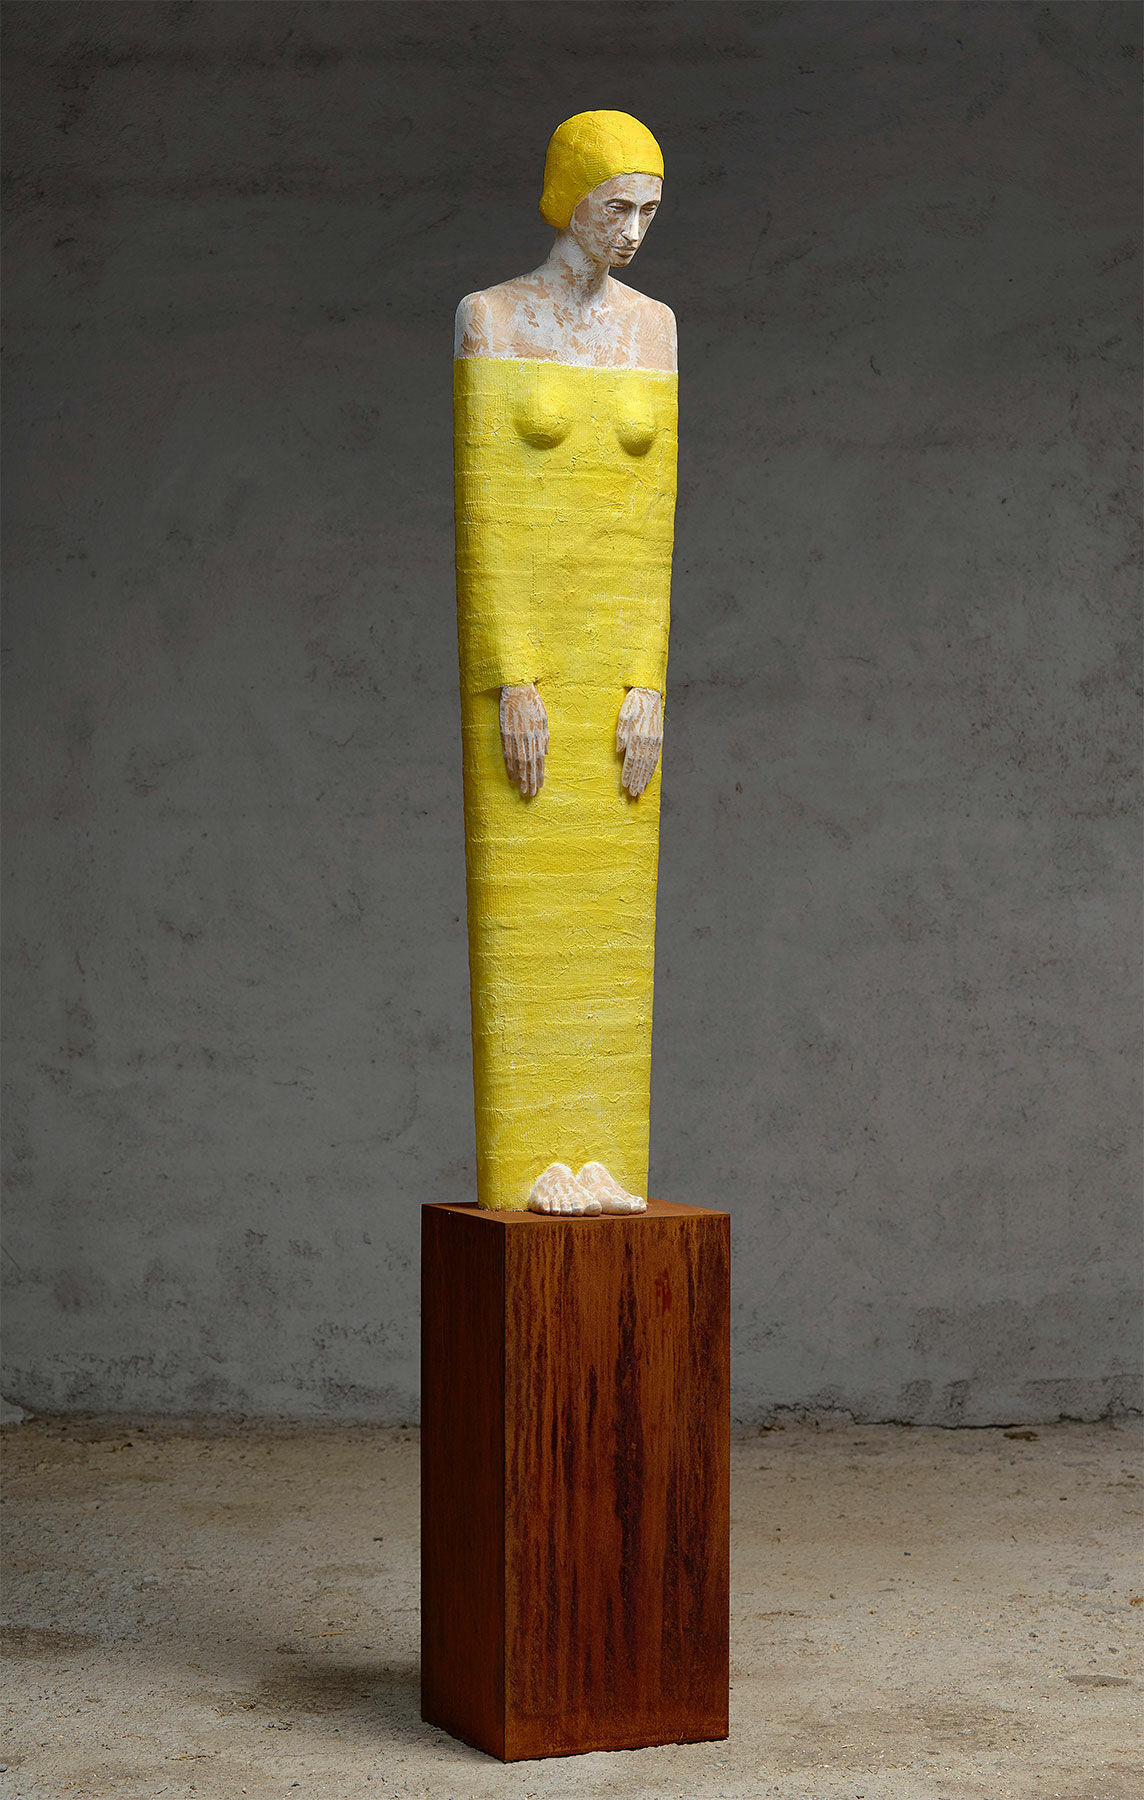 Skulptur "Hvilende" (Original / Unikt stykke), træ von Eric Perathoner